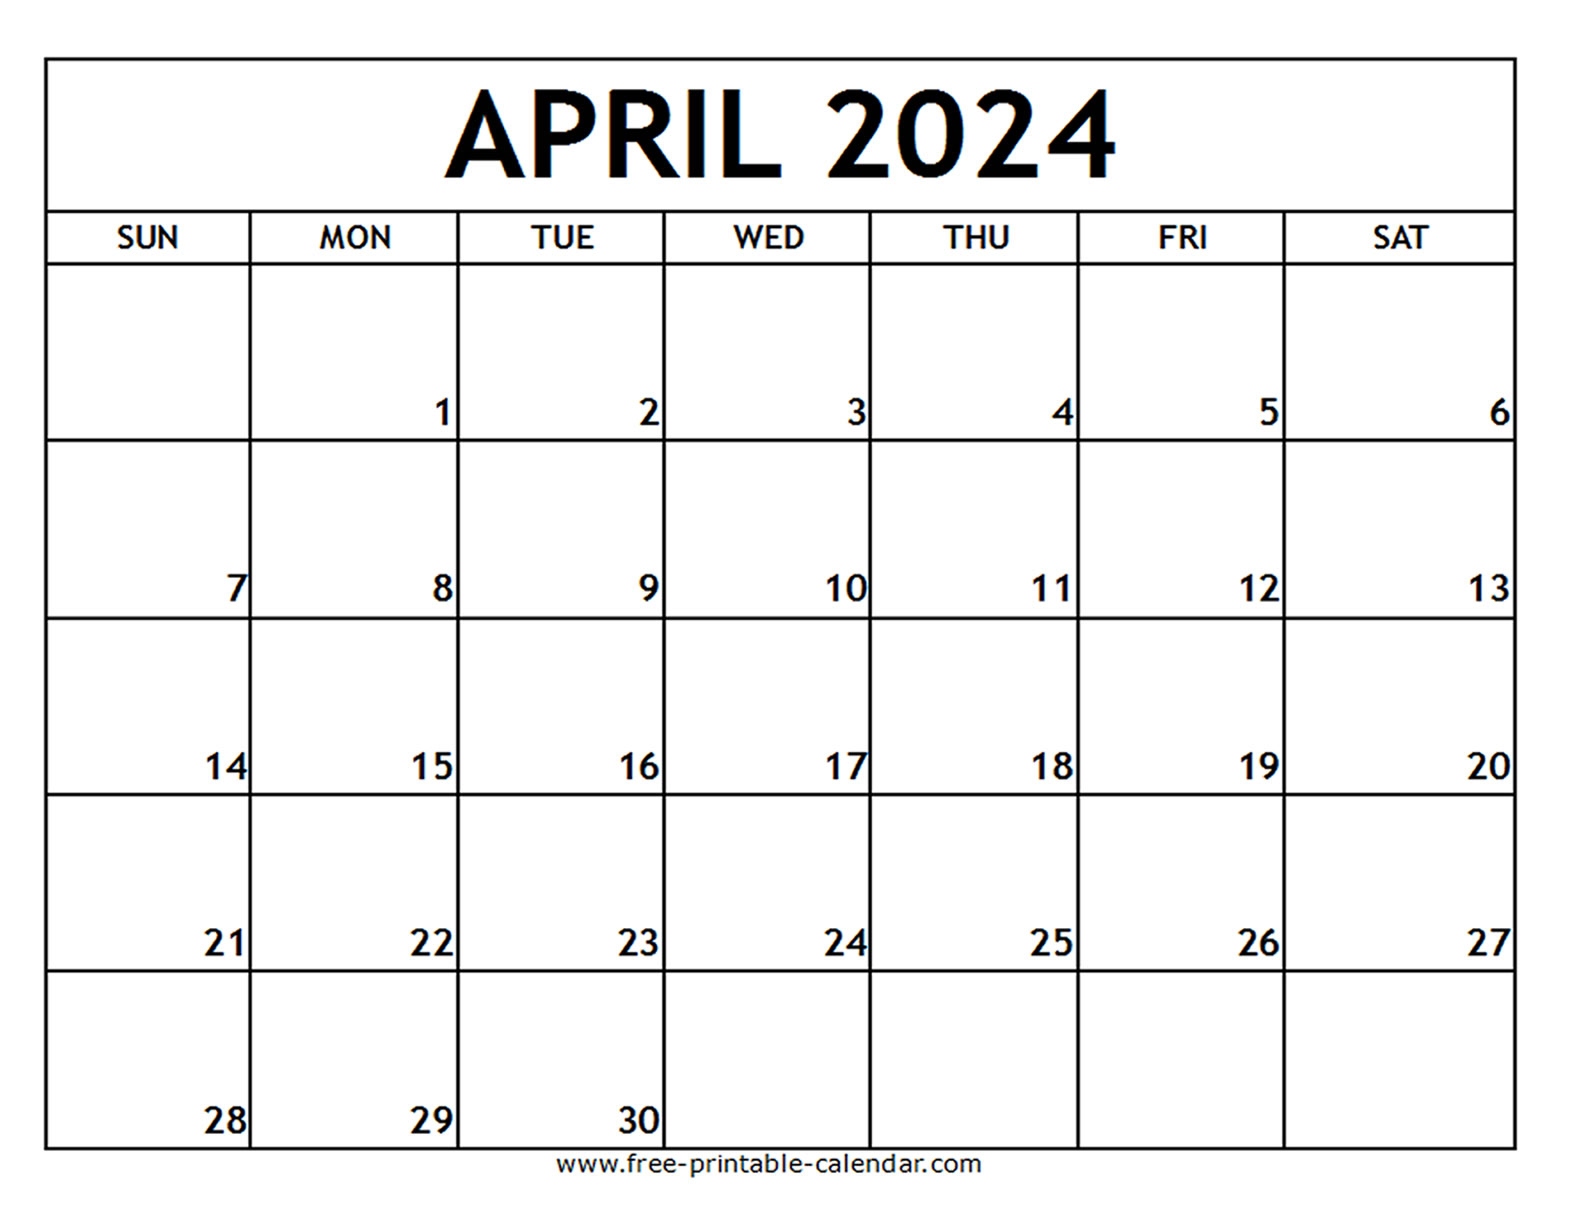 April 2024 Printable Calendar - Free-Printable-Calendar in Free Printable Calendar April May 2024